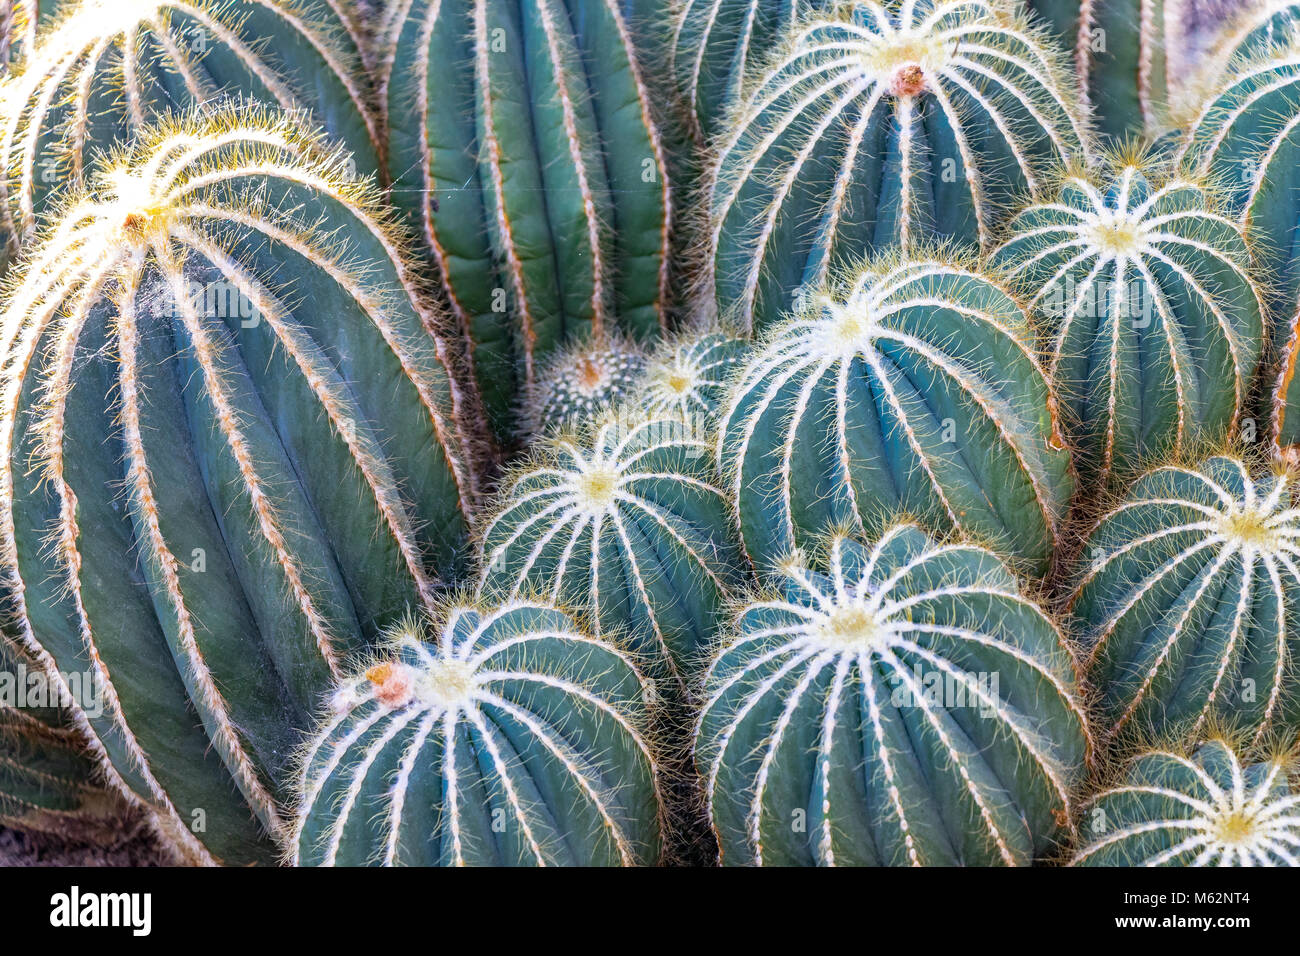 close up of Parodia magnifica or ball cactus Stock Photo